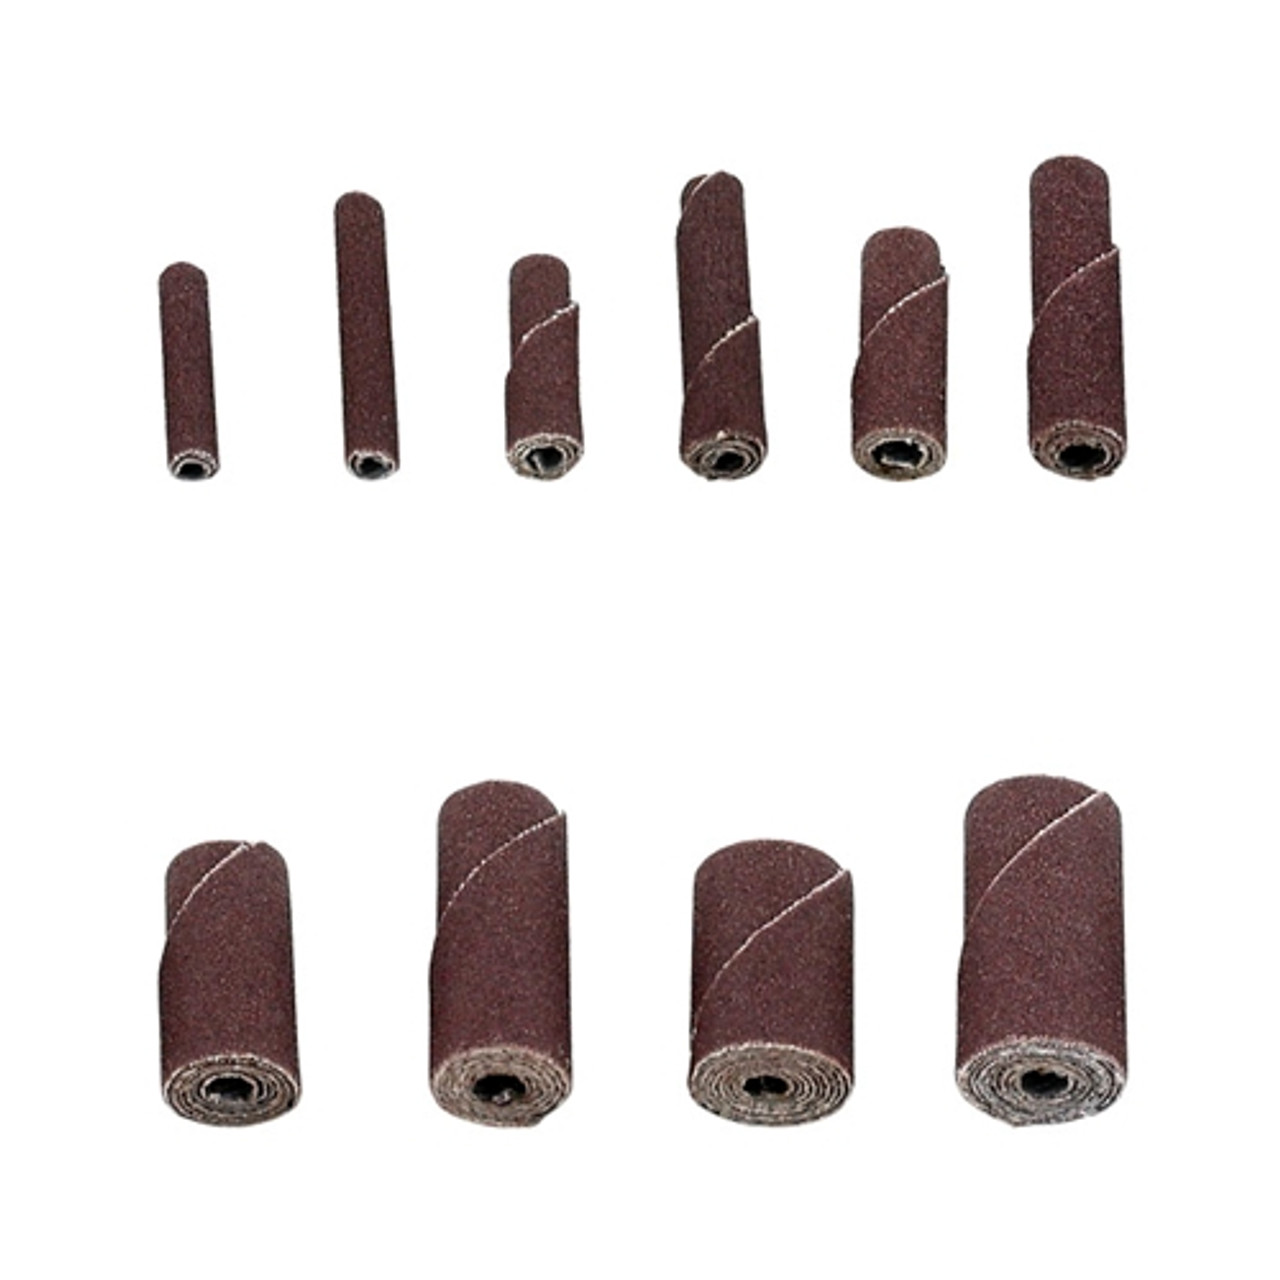 Abrasive Cartridge Rolls - 3/16" x 3/4" x 3/32", 240 Grit